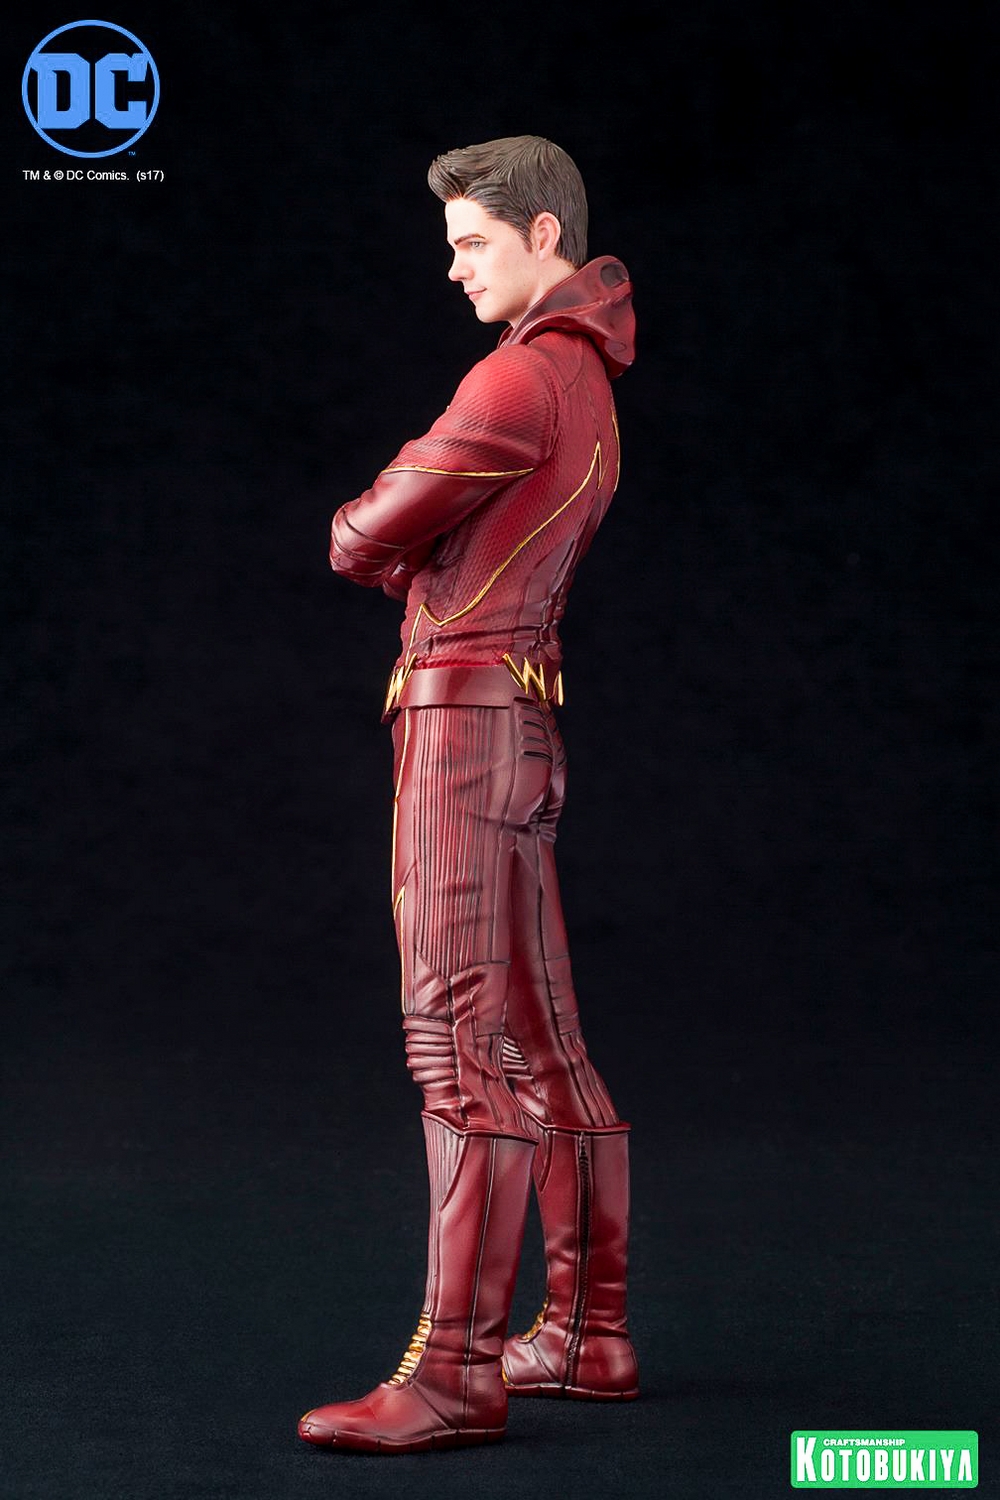 Kotobukiya-Barry-Allen-The-Flash-ARTFX-plus-statue-009.jpg